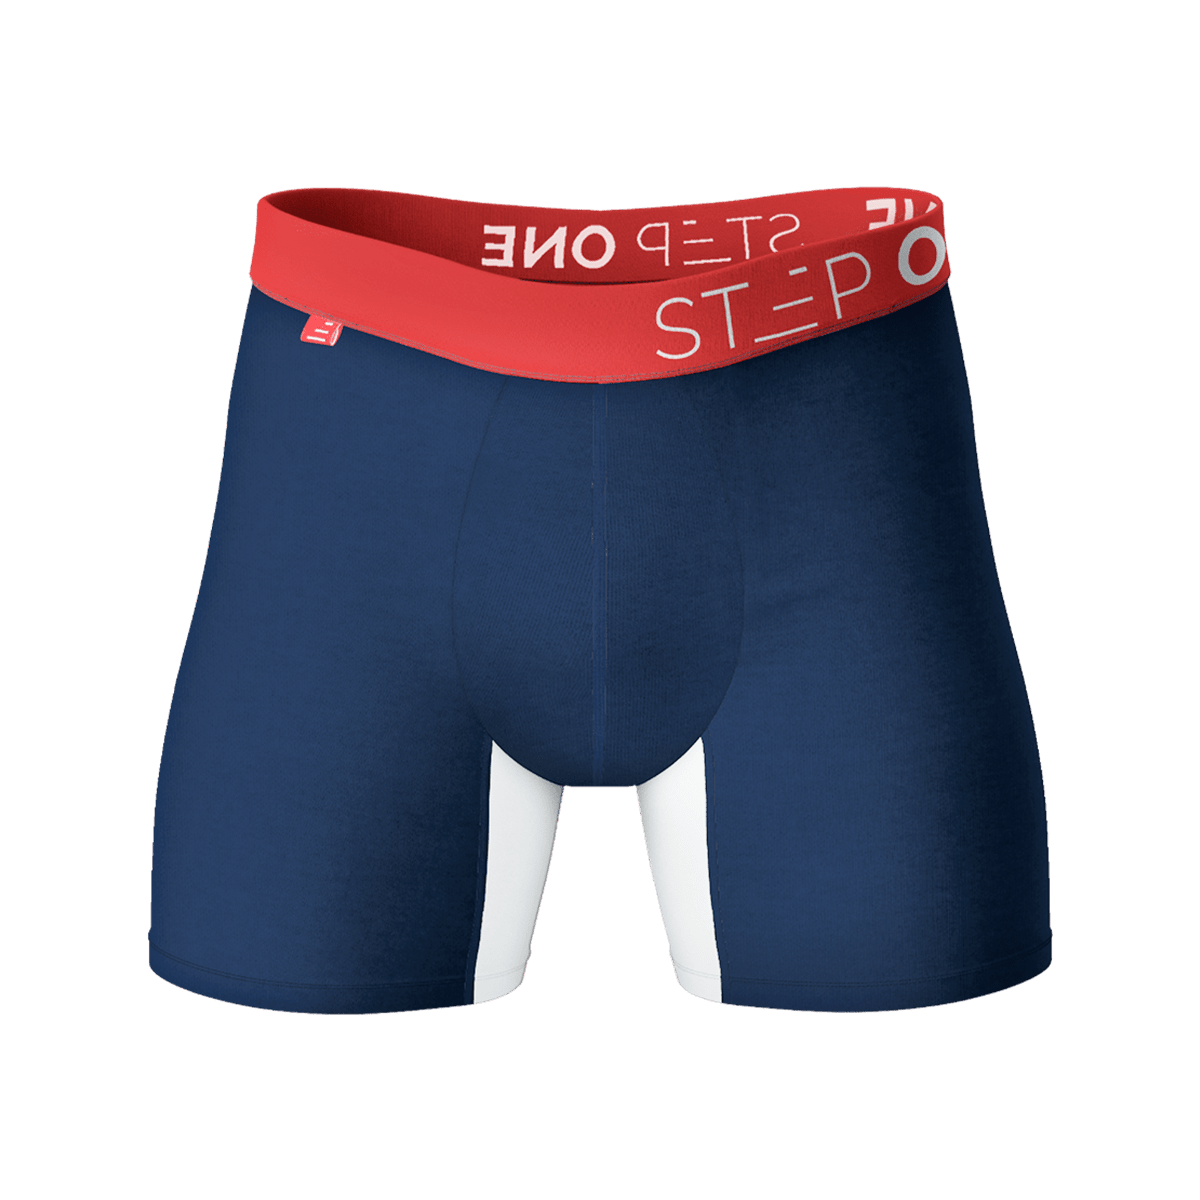 Blue Men's Bamboo Underwear